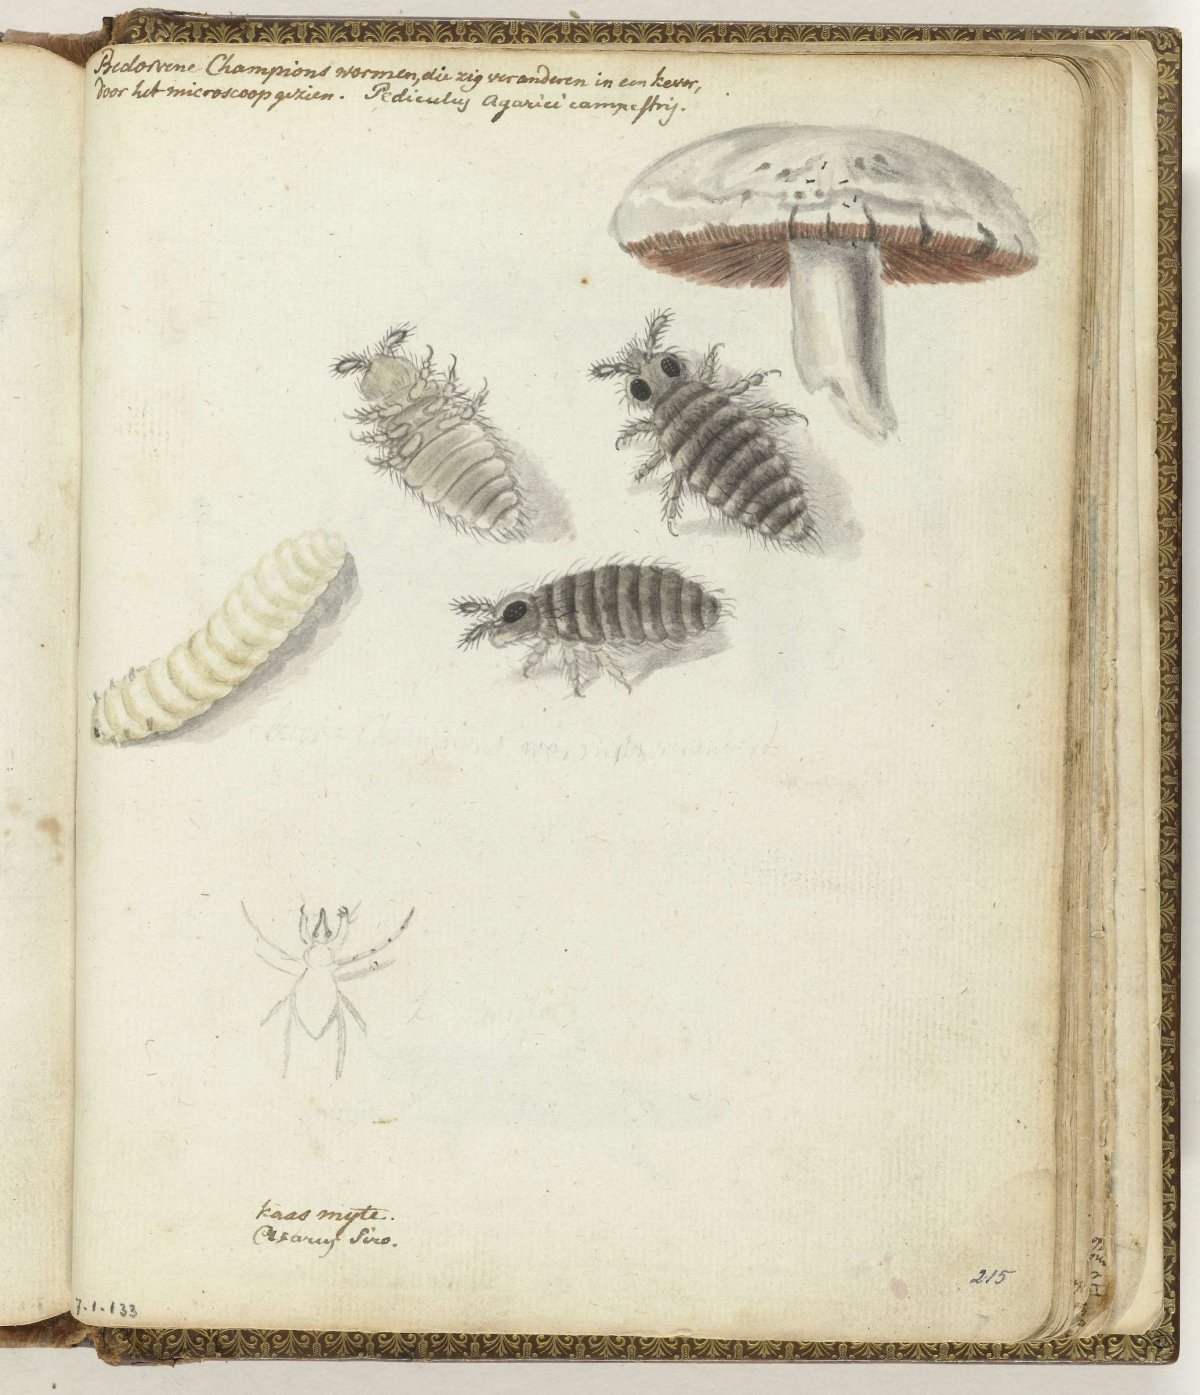 Champignonswormen, Jan Brandes, 1770 - 1787